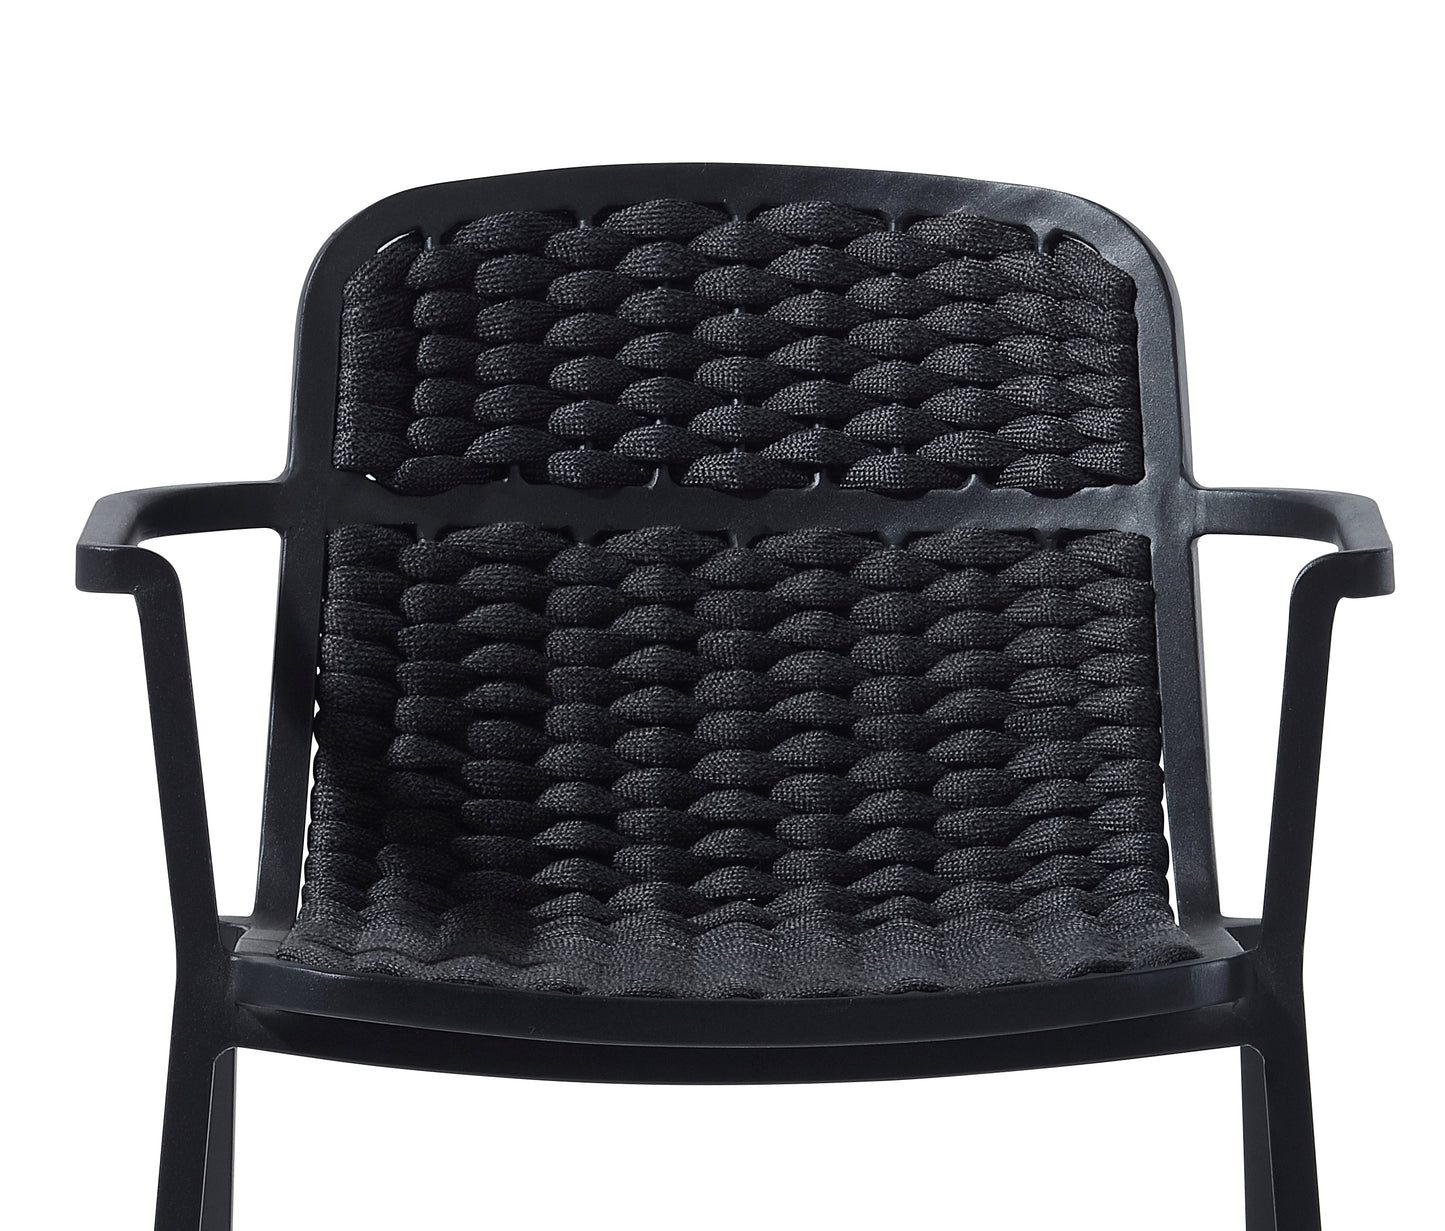 Tora stol sort - Drømmemøbler shop